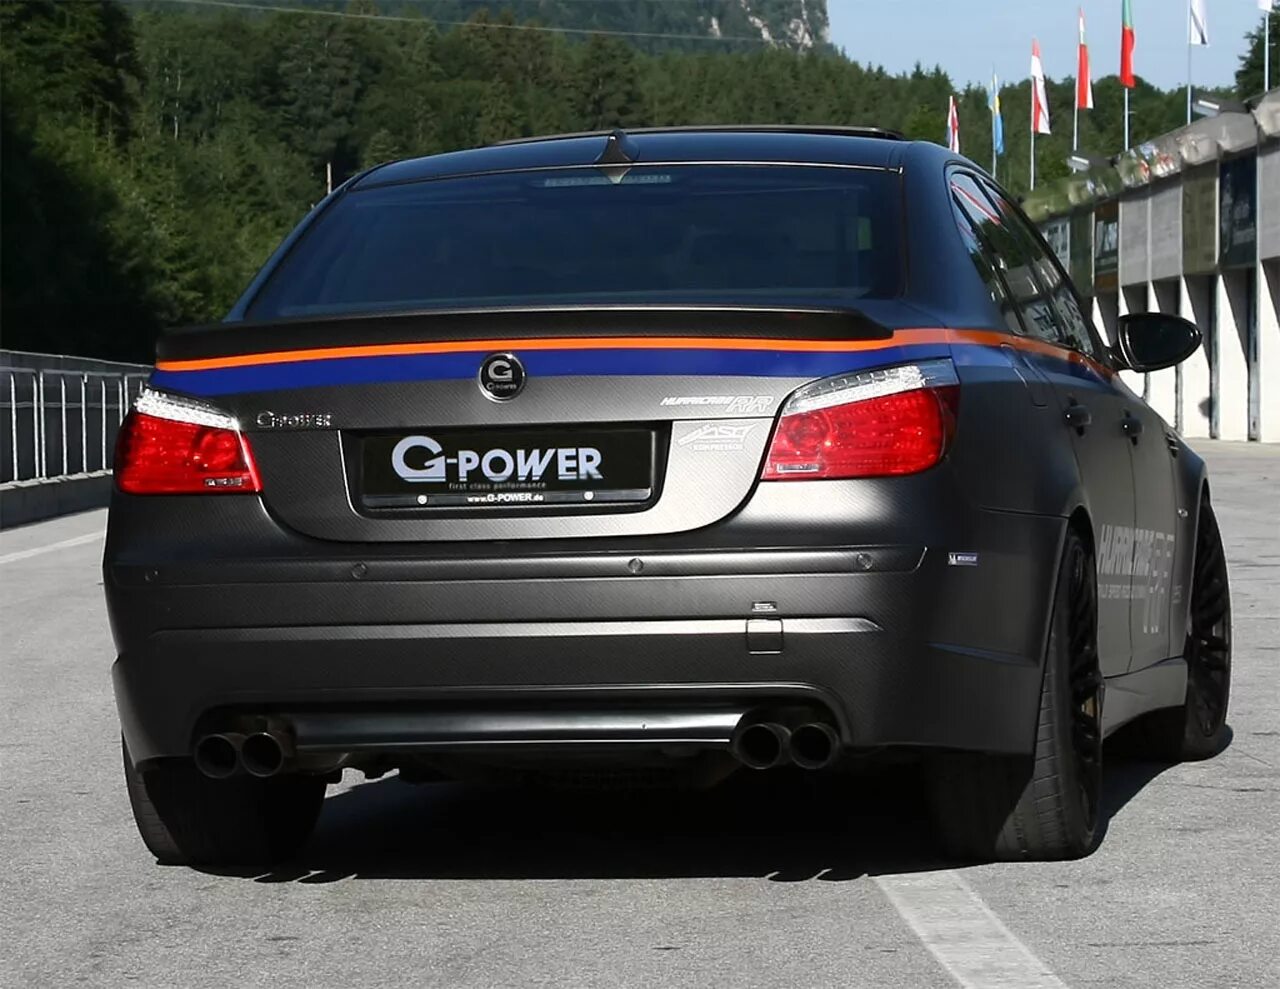 G v 10. BMW e60 g Power. BMW m5 g Power. BMW m5 e60 g Power. G Power BMW m5 Hurricane RR.